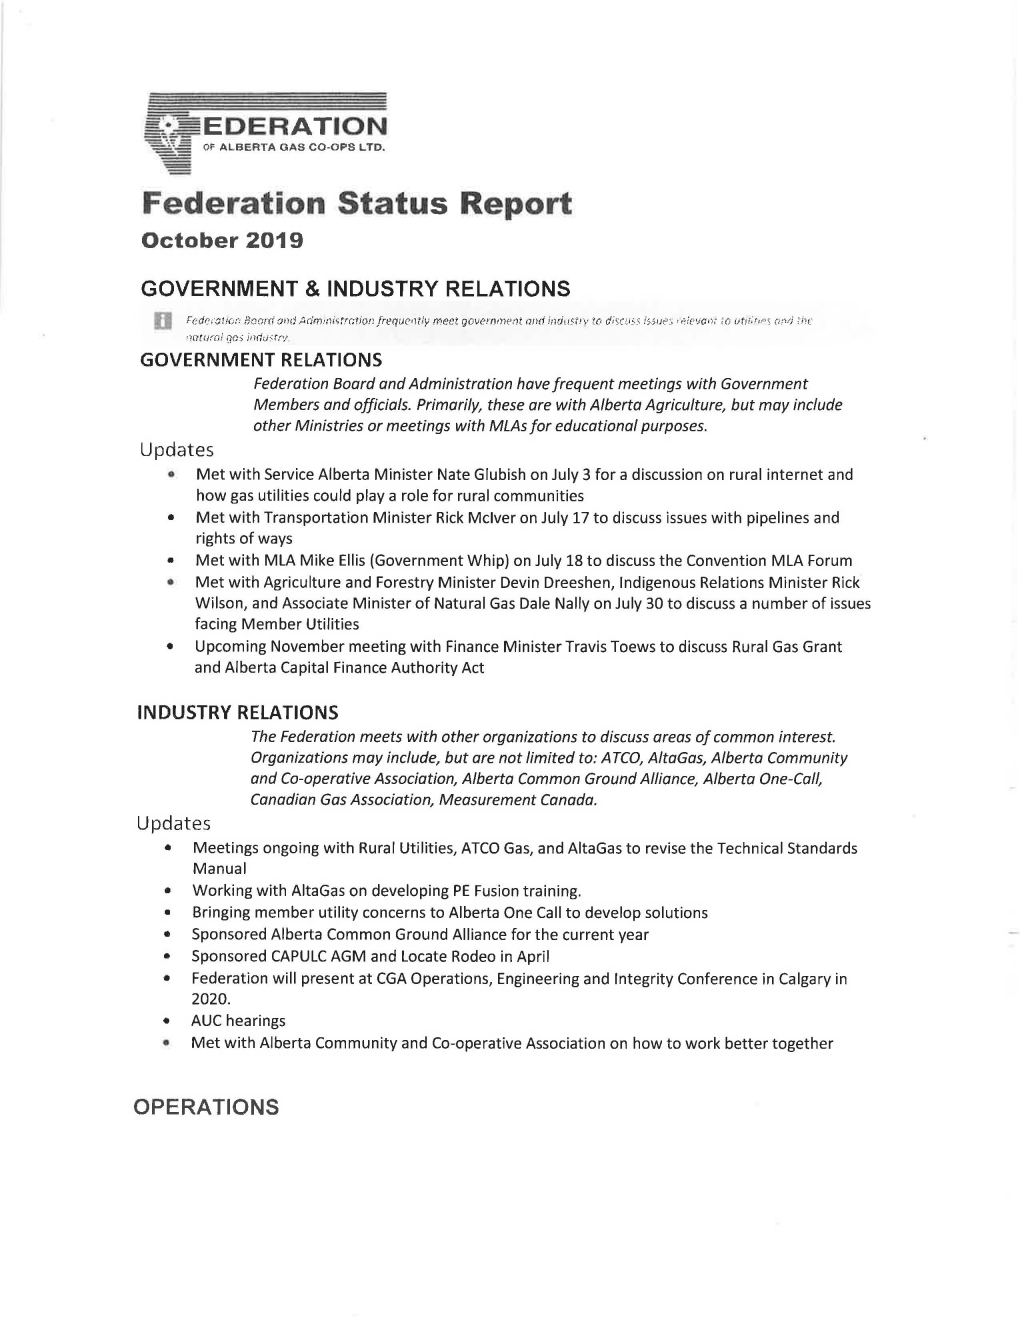 Federation Status Report October 2019